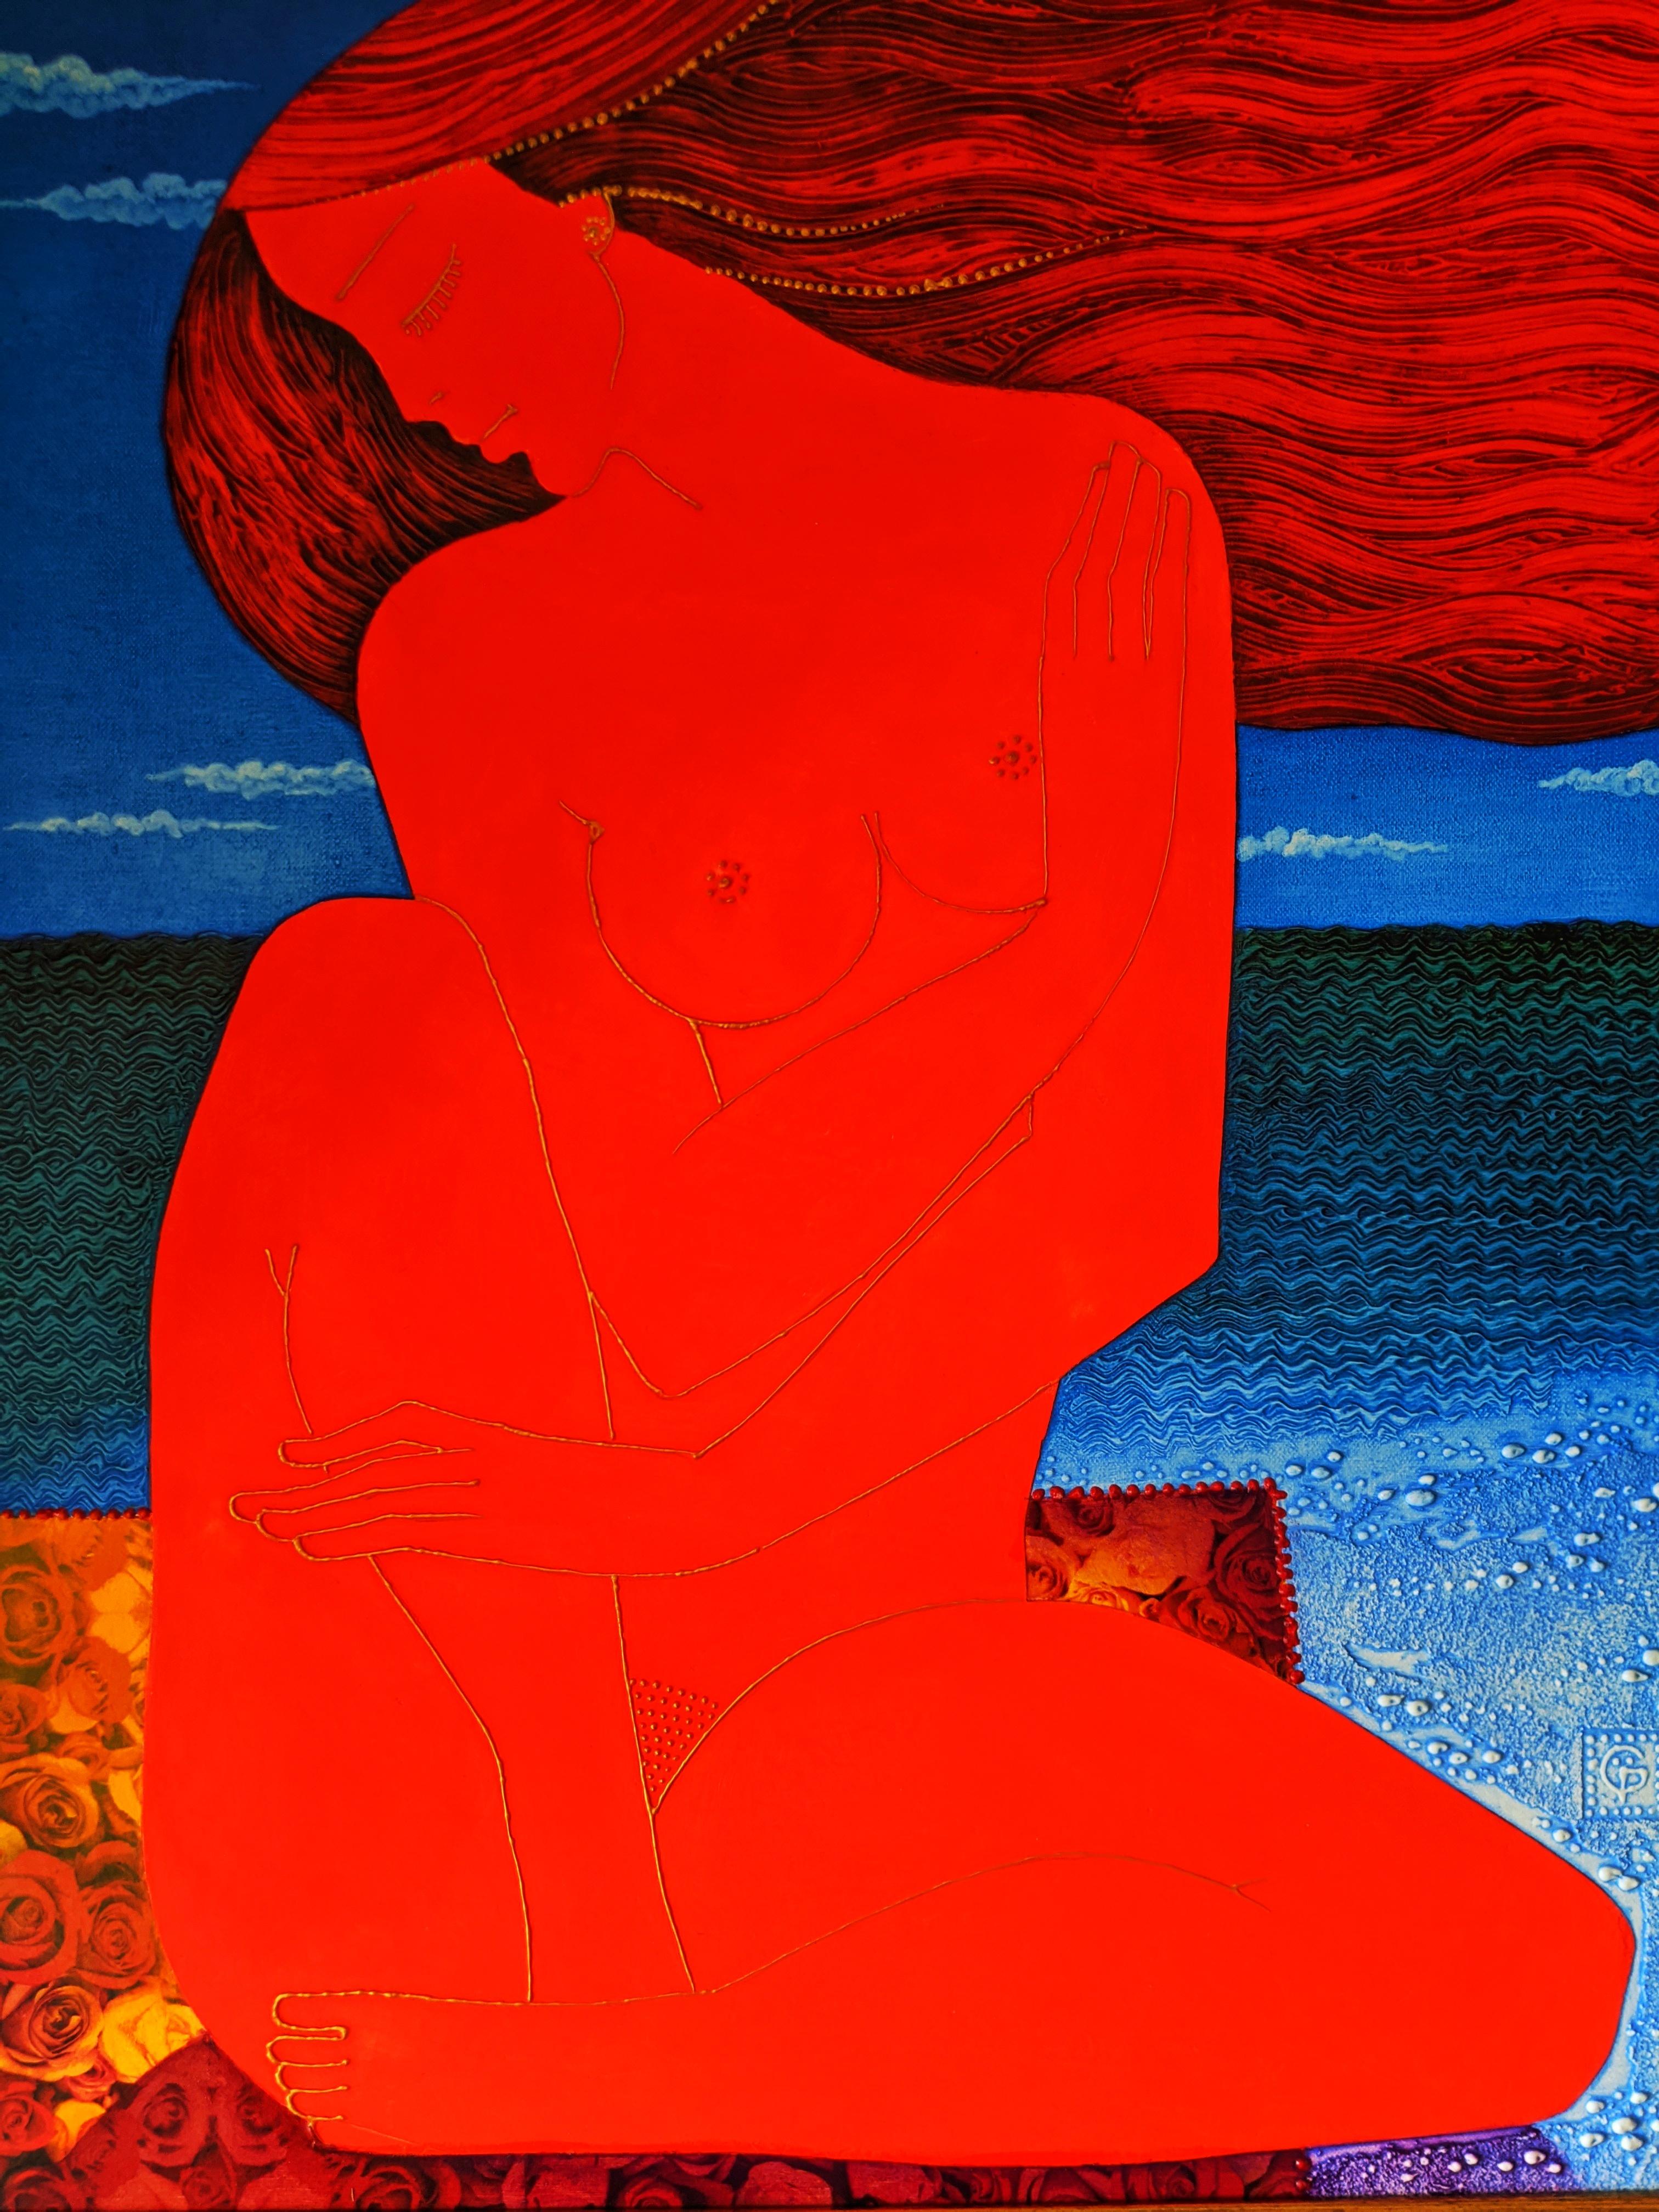 Stefano Georges Nude Painting – Sommer - Ein figuratives Aktgemälde Blattgold Blau Grau Braun Rot